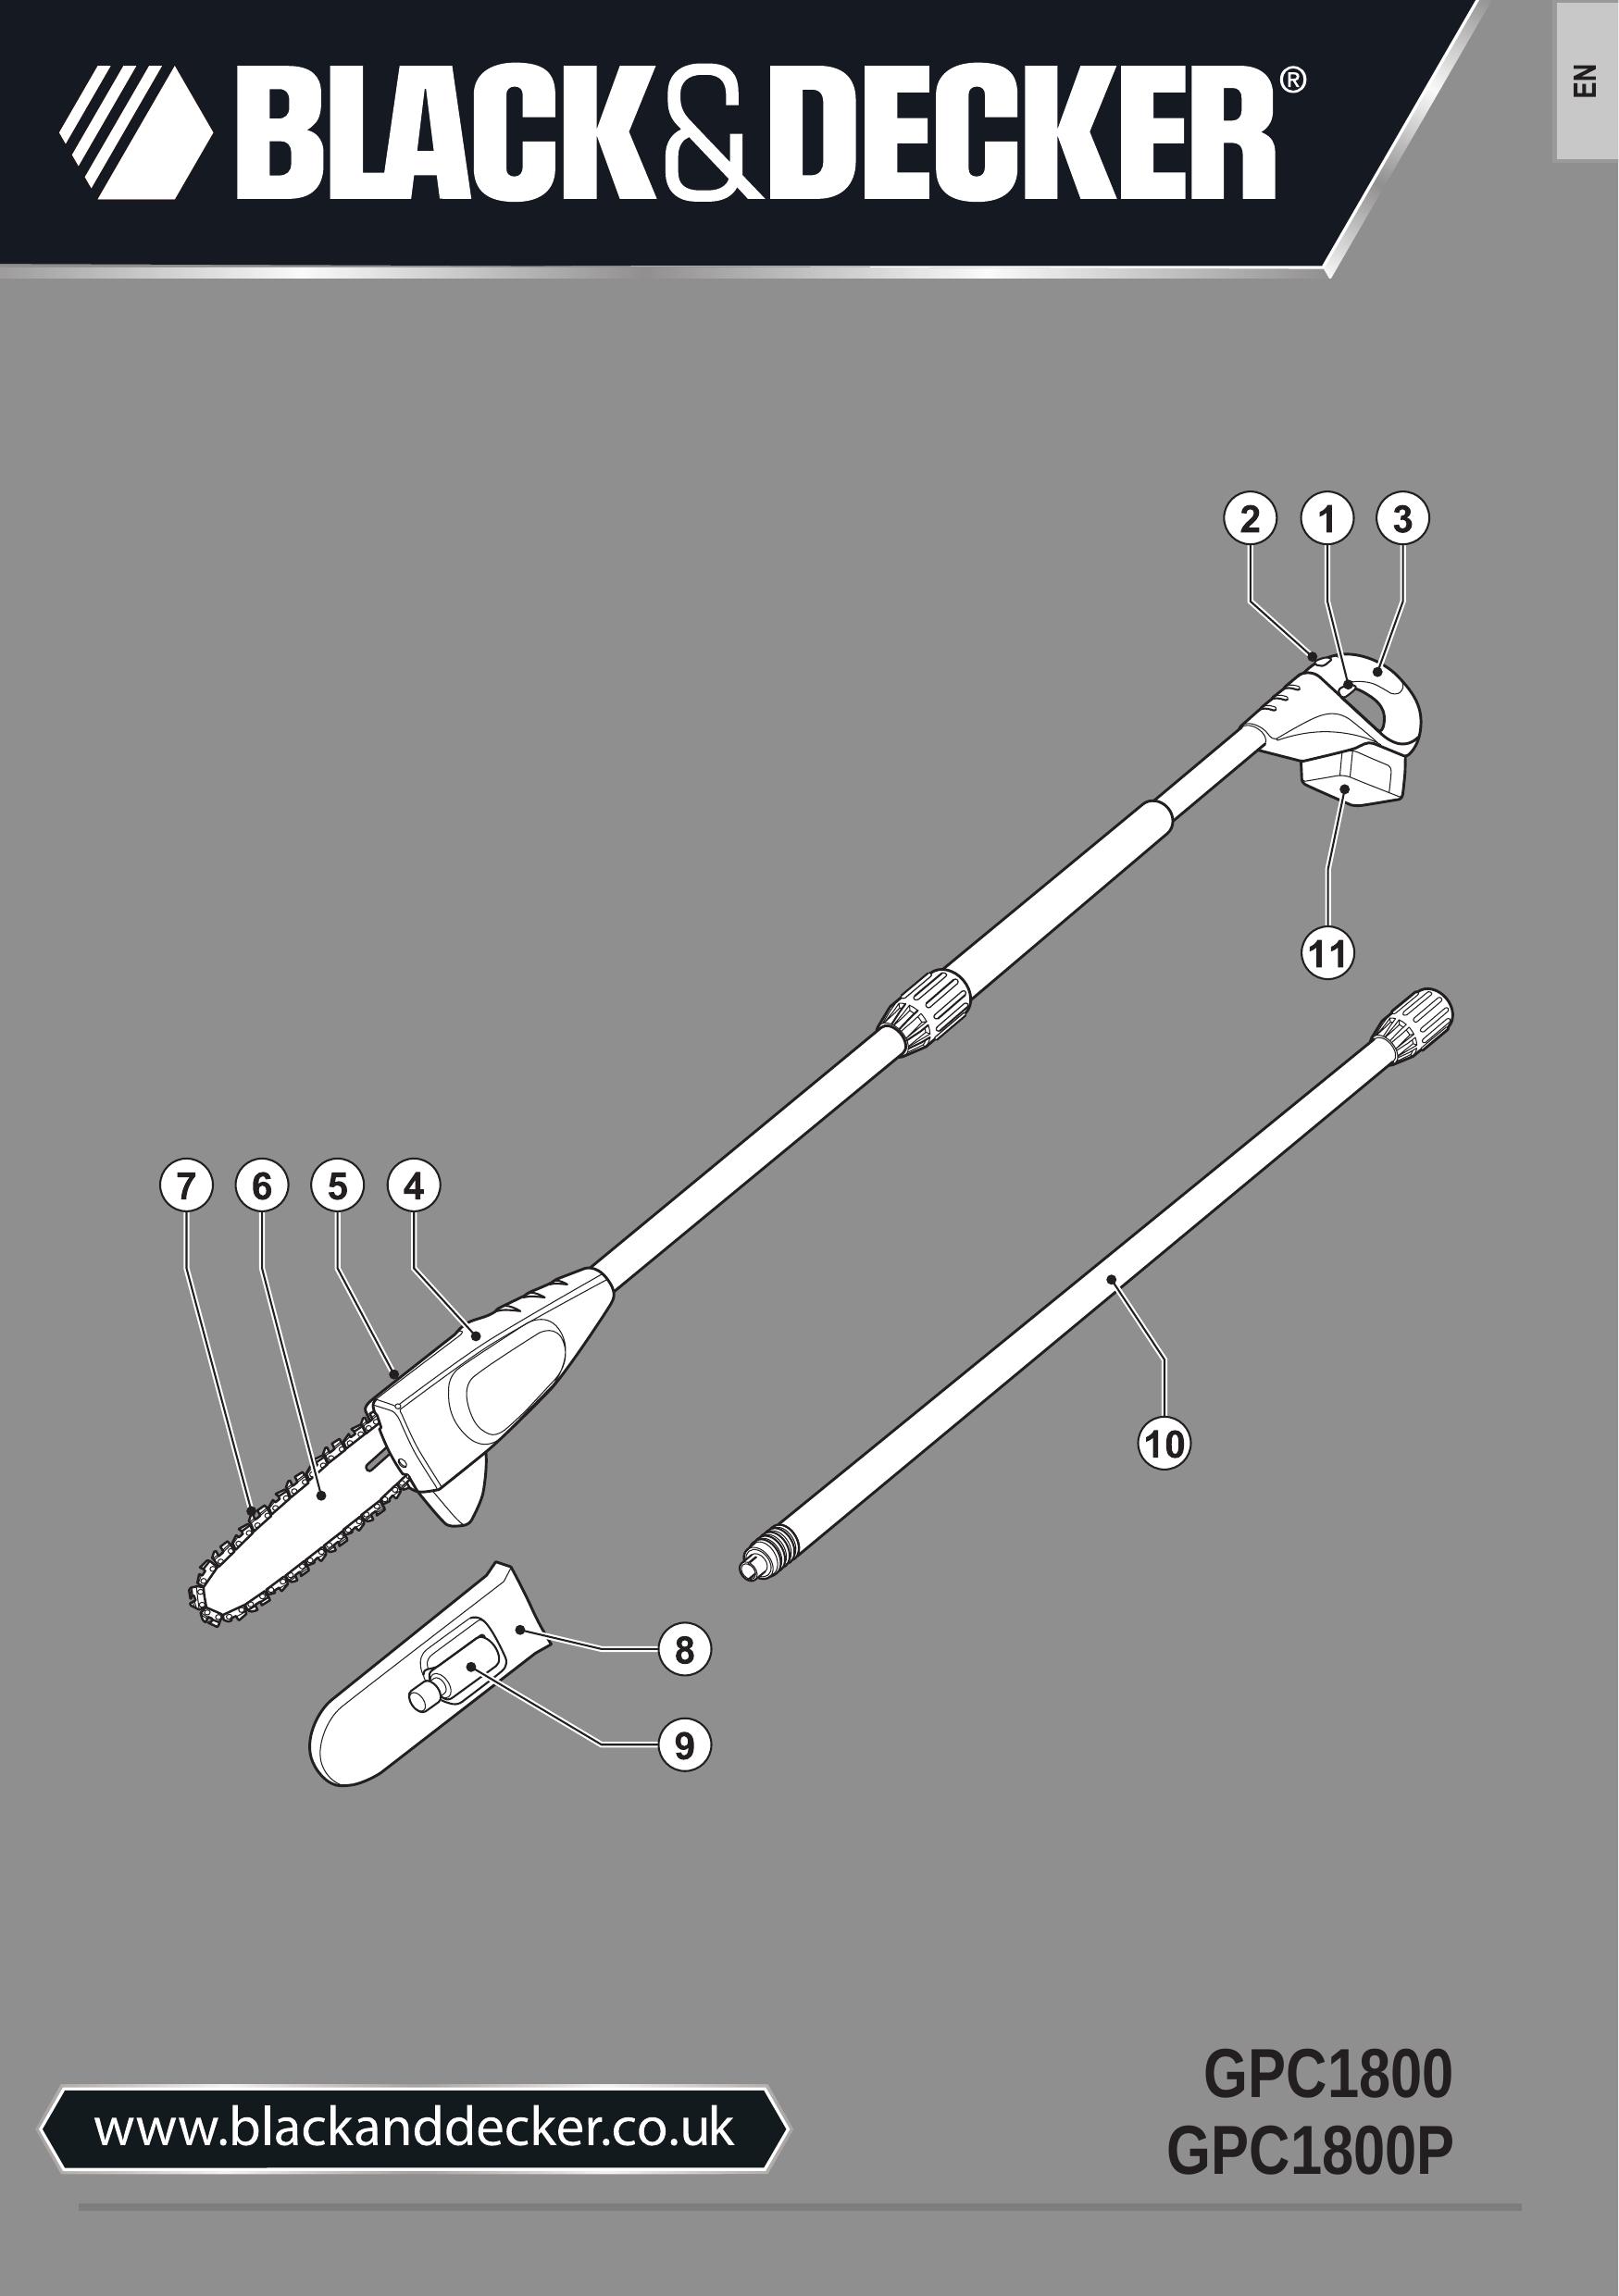 Black & Decker GPC1800P Pole Saw User Manual